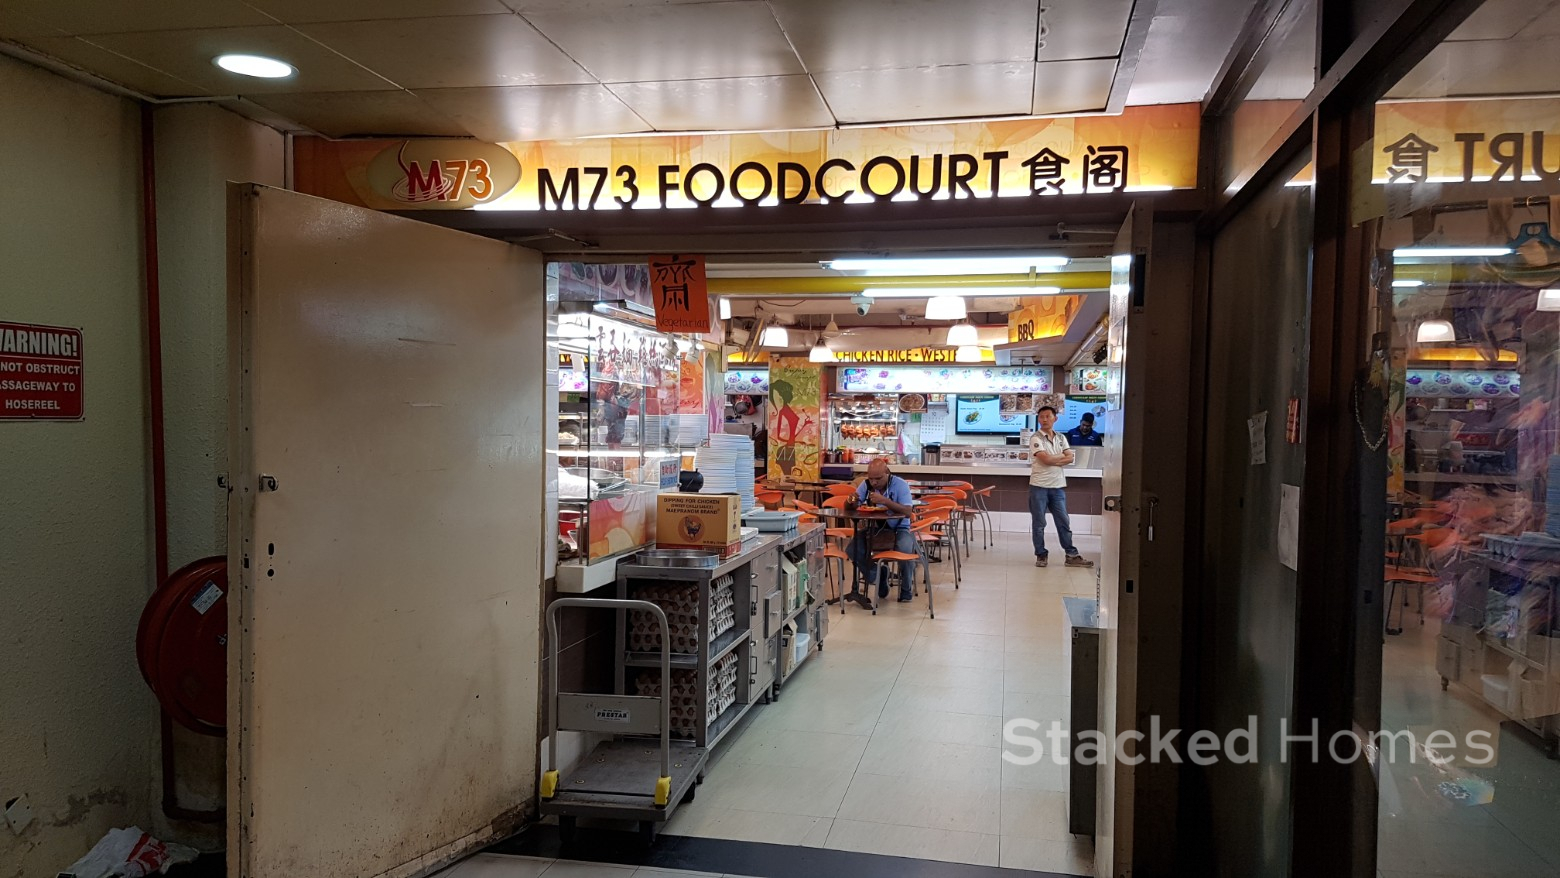 M73 Foodcourt Orchard Towers